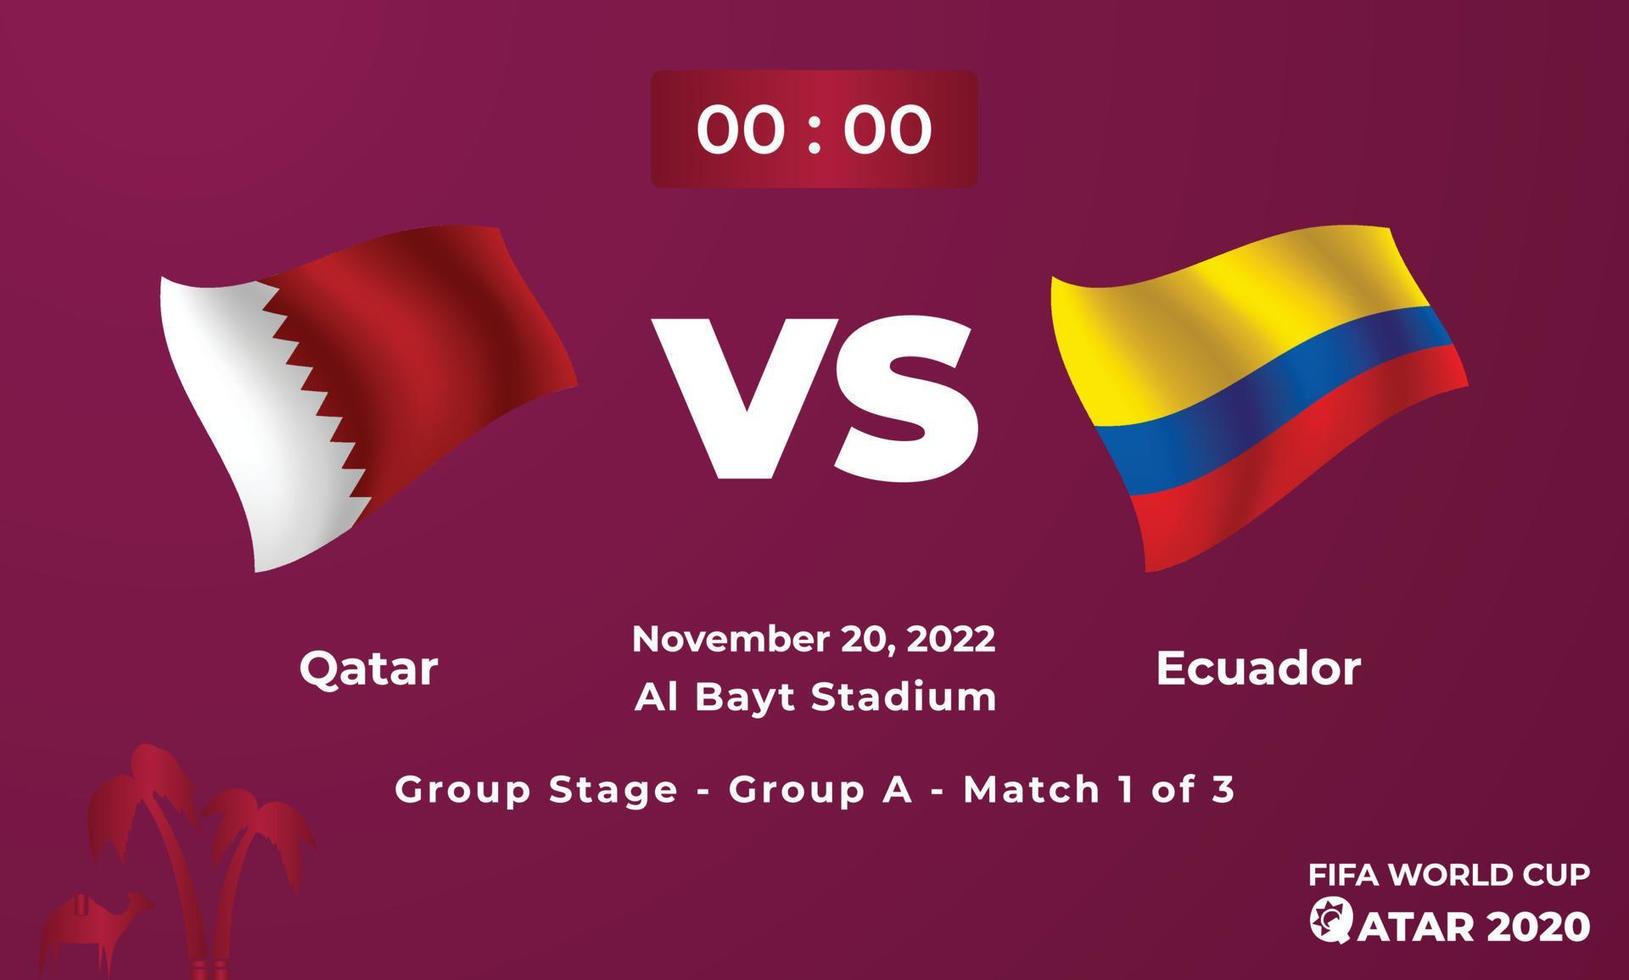 Qatar VS Ecuador Football MatchTemplate, FIFA World Cup in Qatar 2022 vector